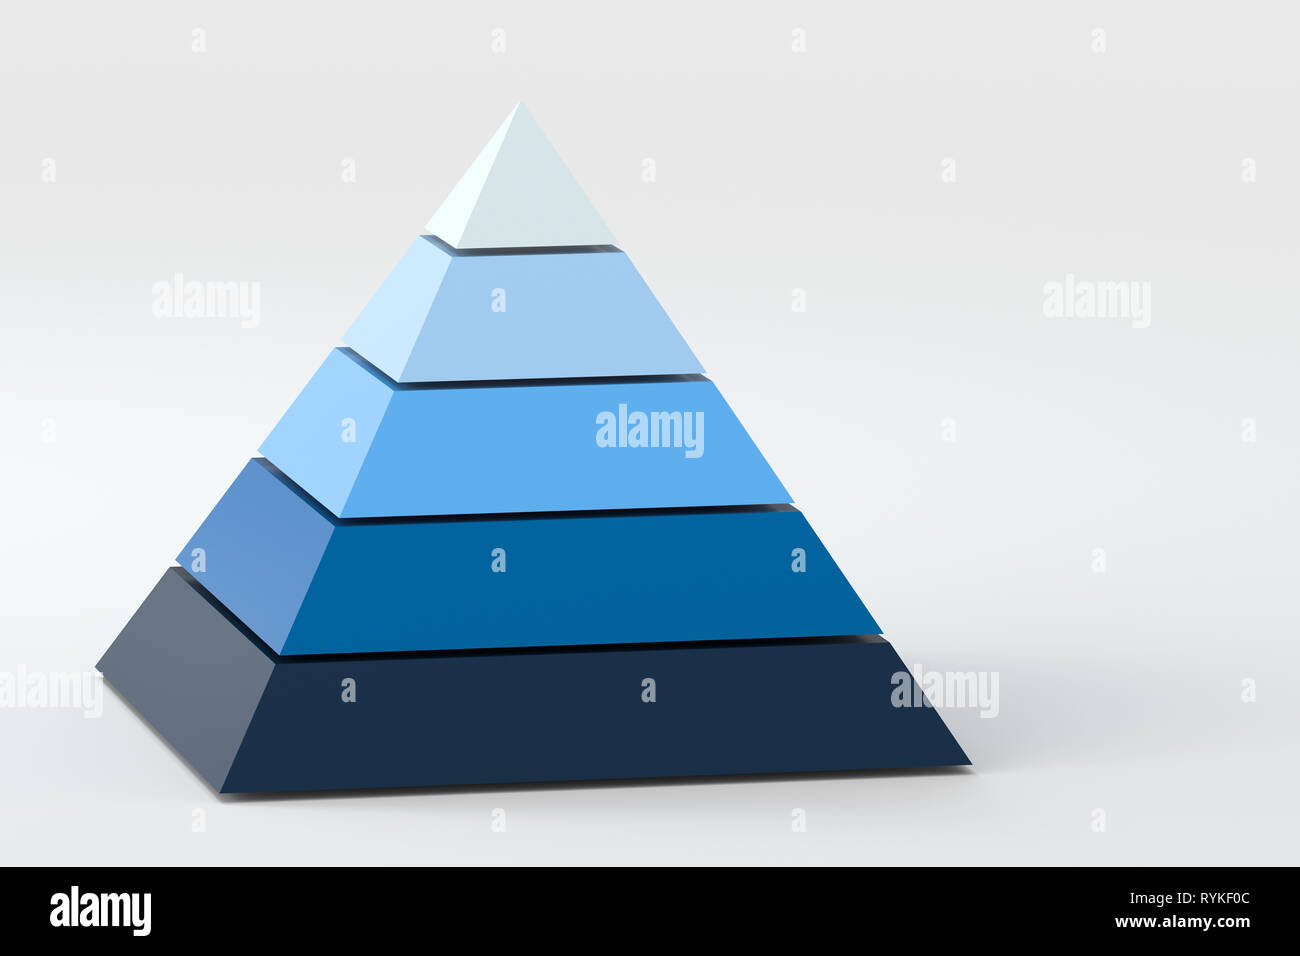 3d model pyramid, 3d rendering Stock Photo